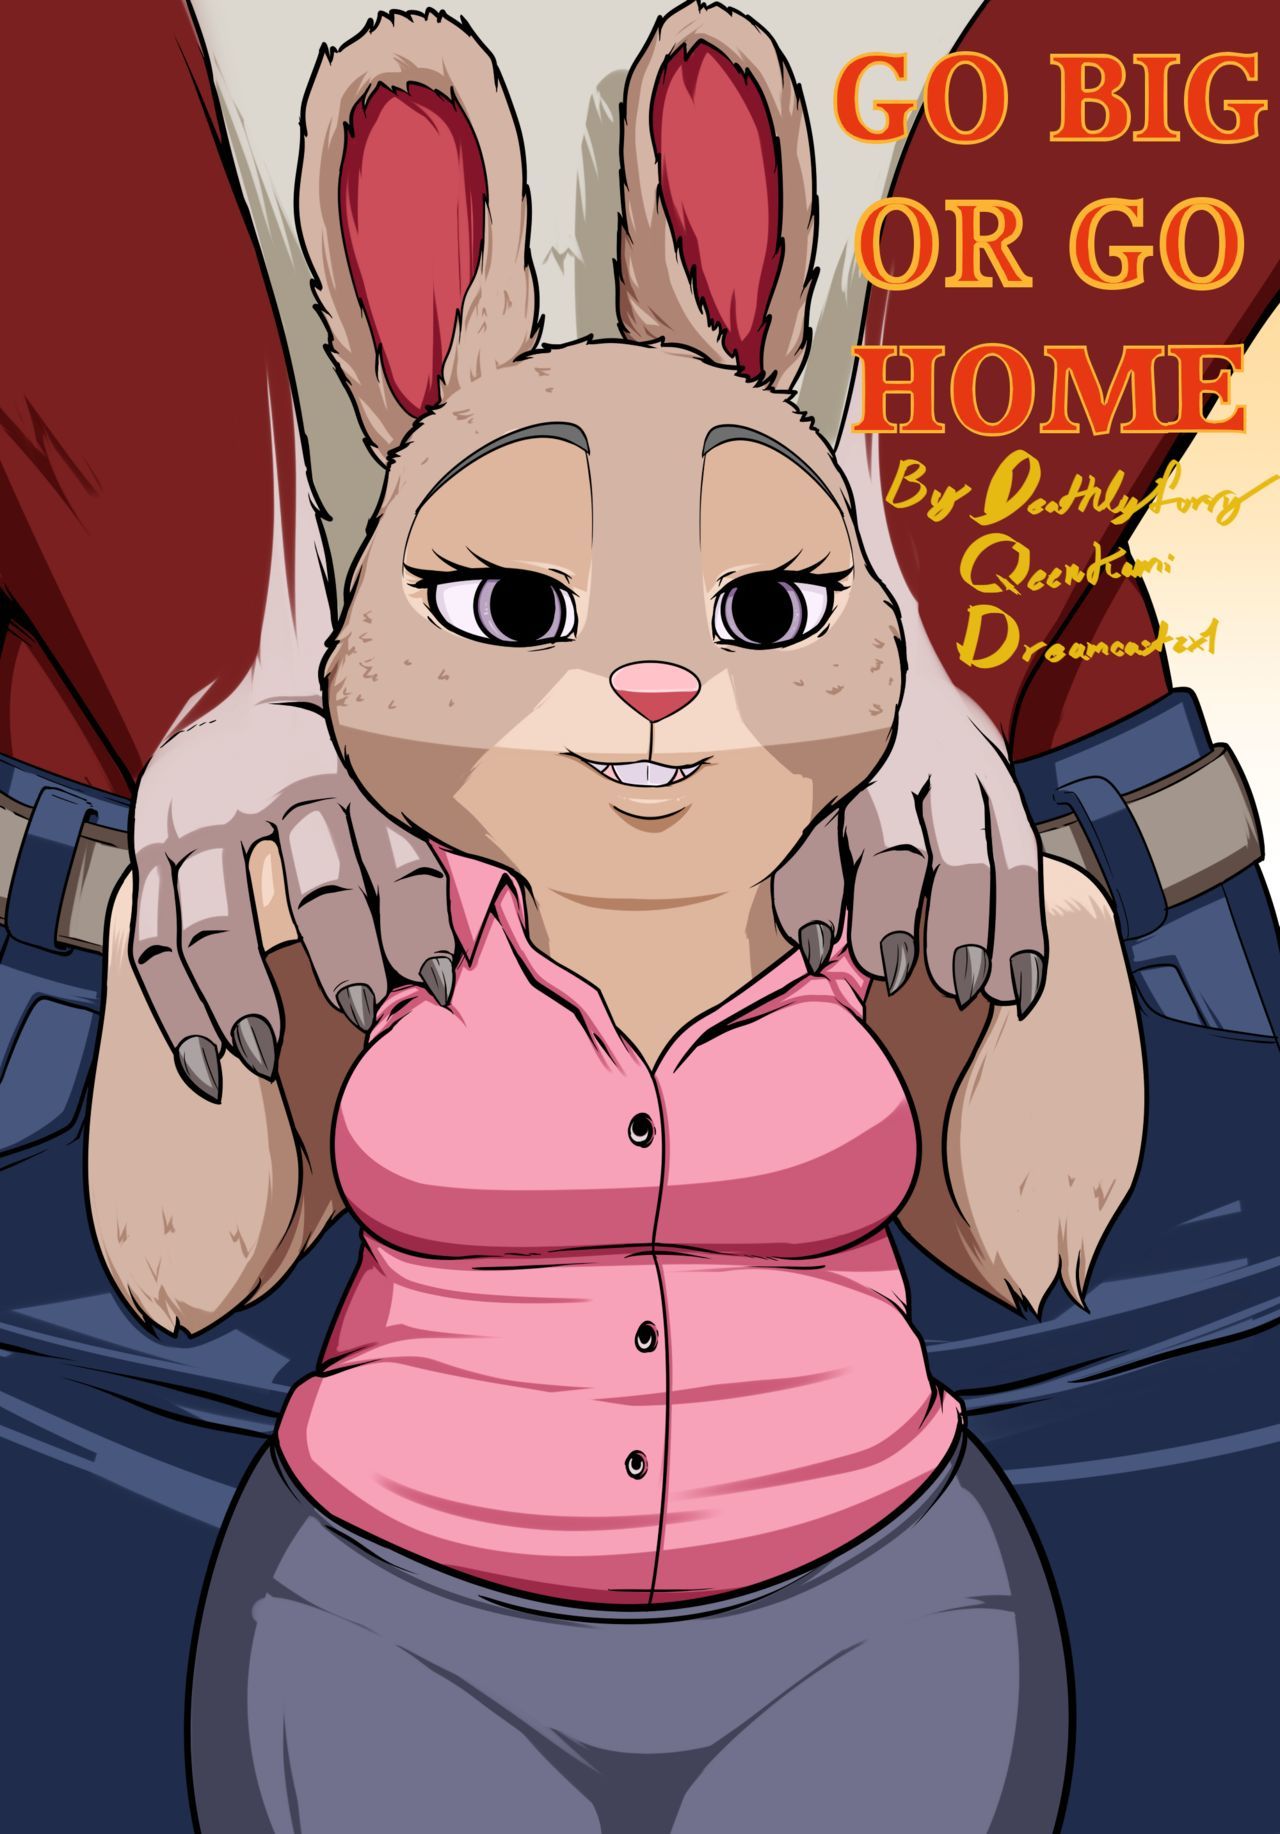 Disney Home Porn - Dreamcastzx] Go Big or Go Home (Zootopia) | Porn Comics